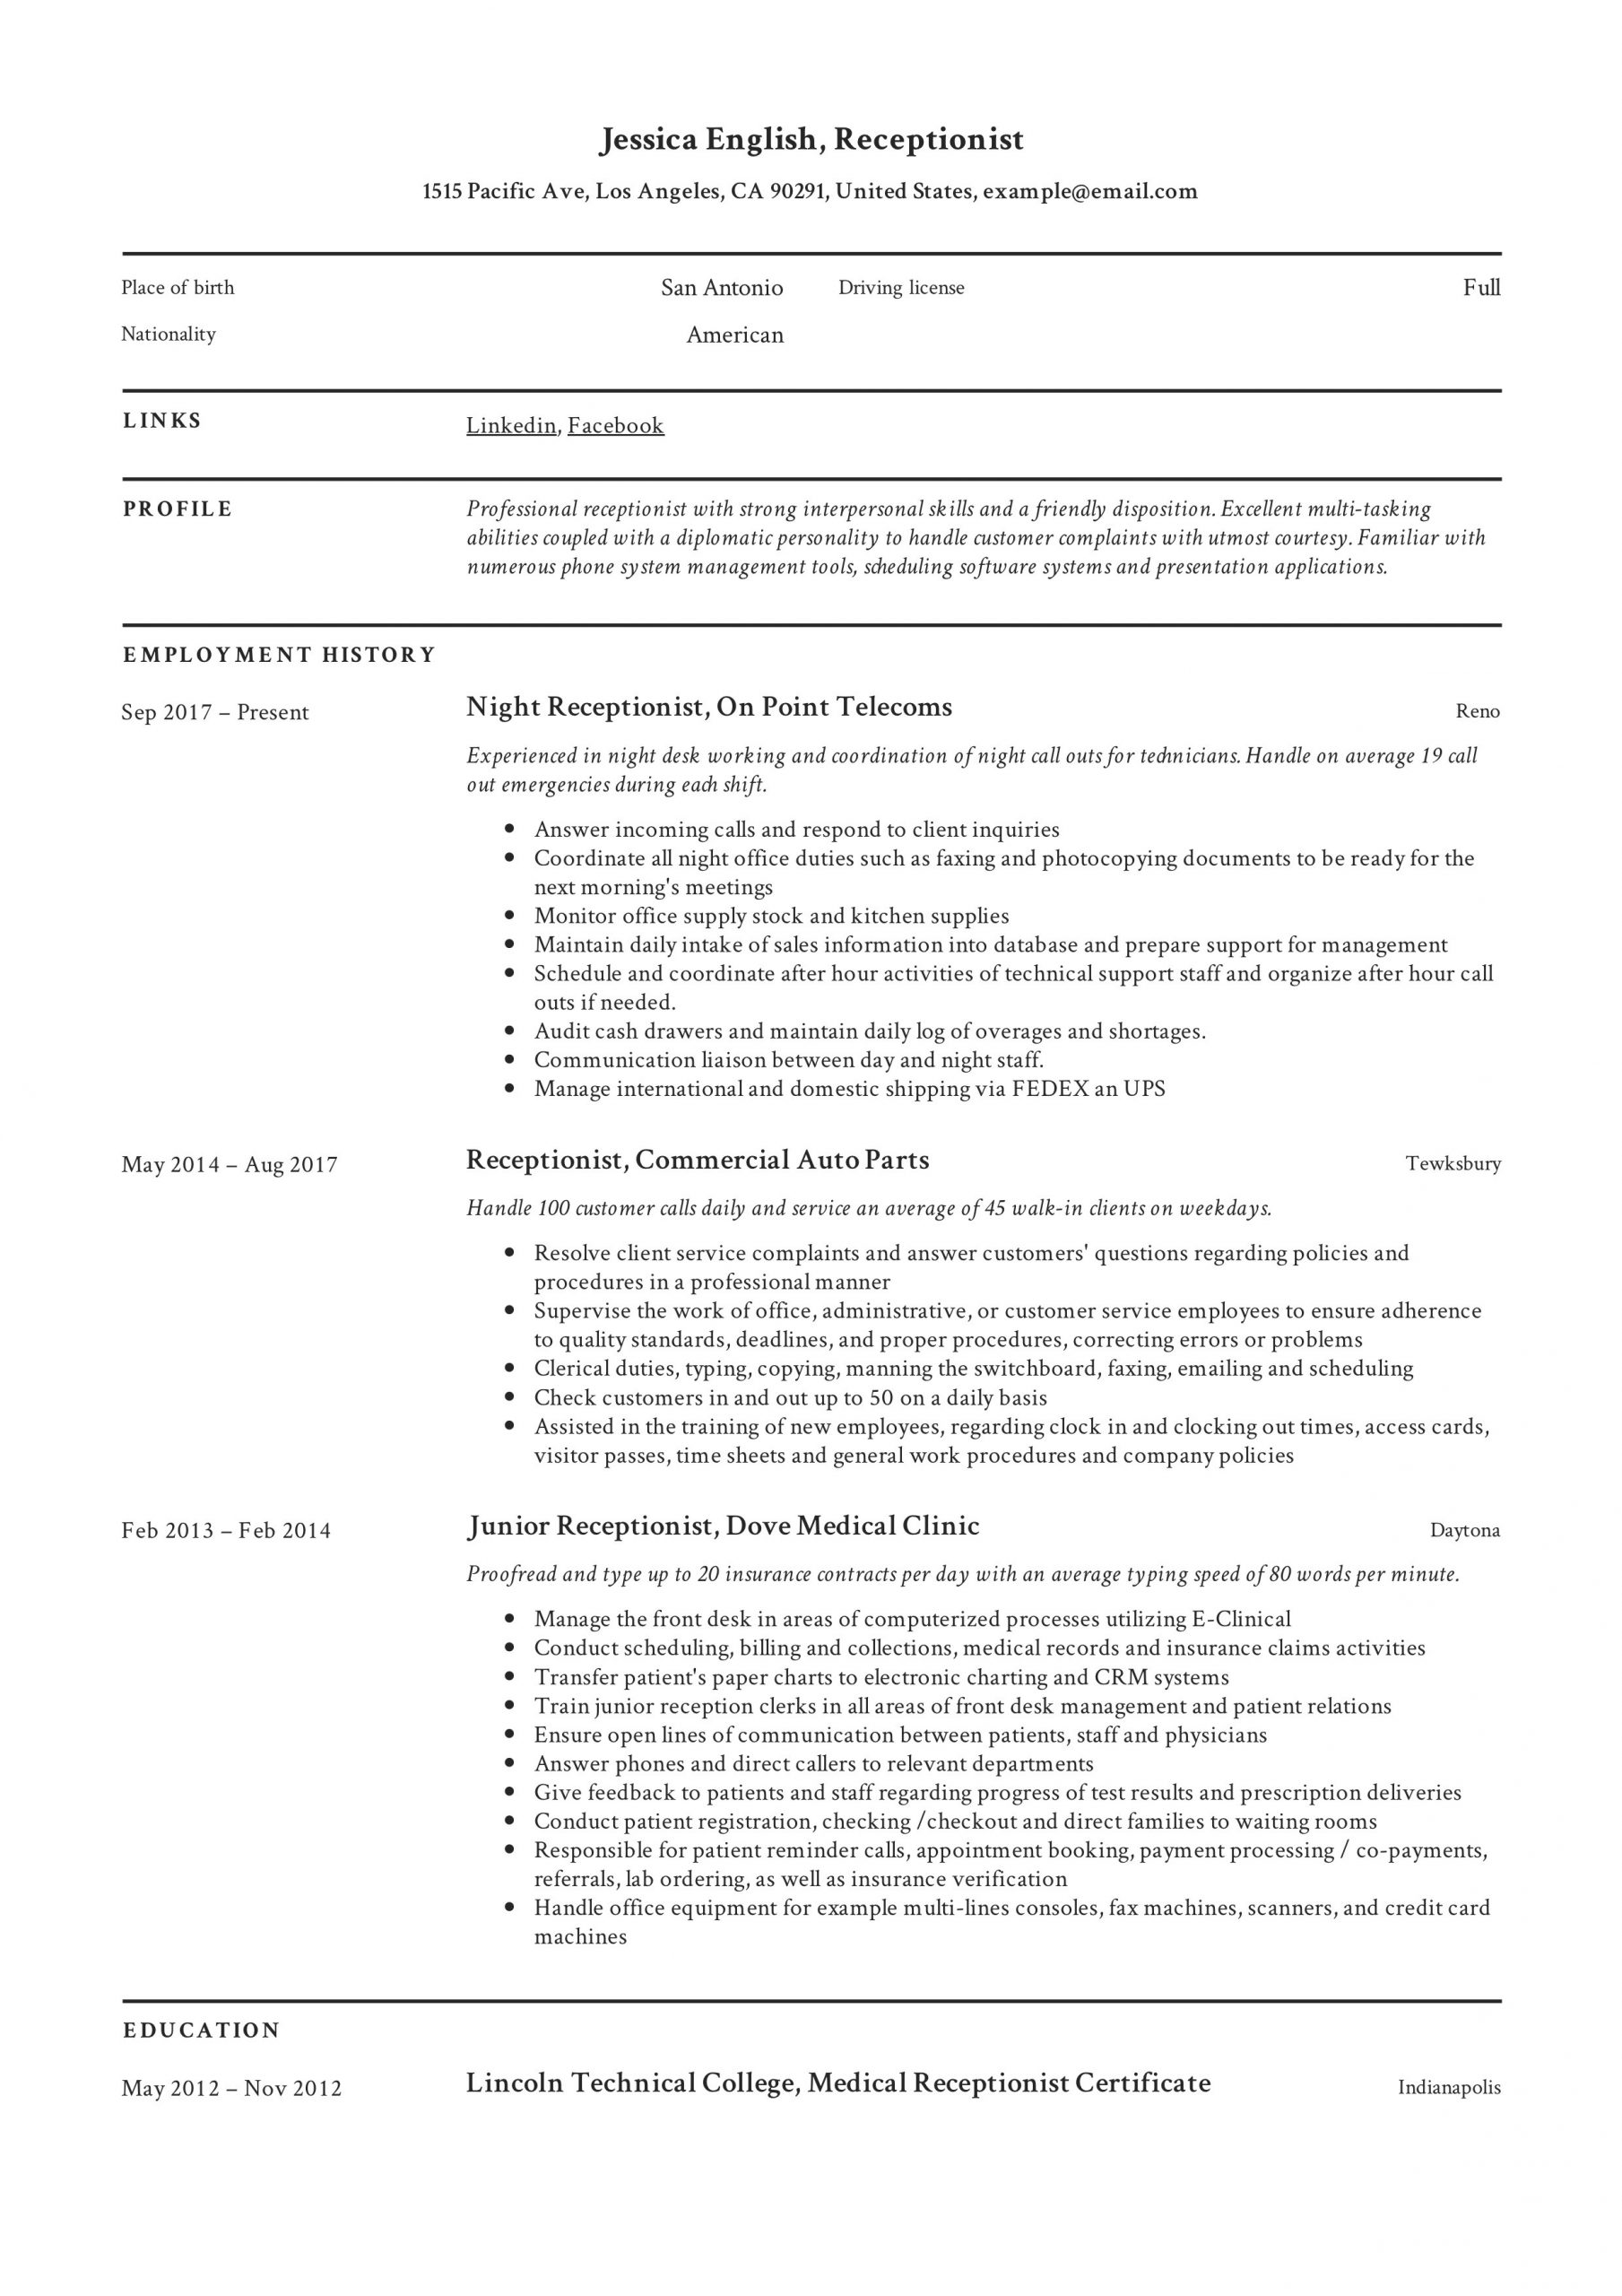 Sample Resume for Receptionist Administrative assistant Administrative Receptionist Resume Sample October 2021